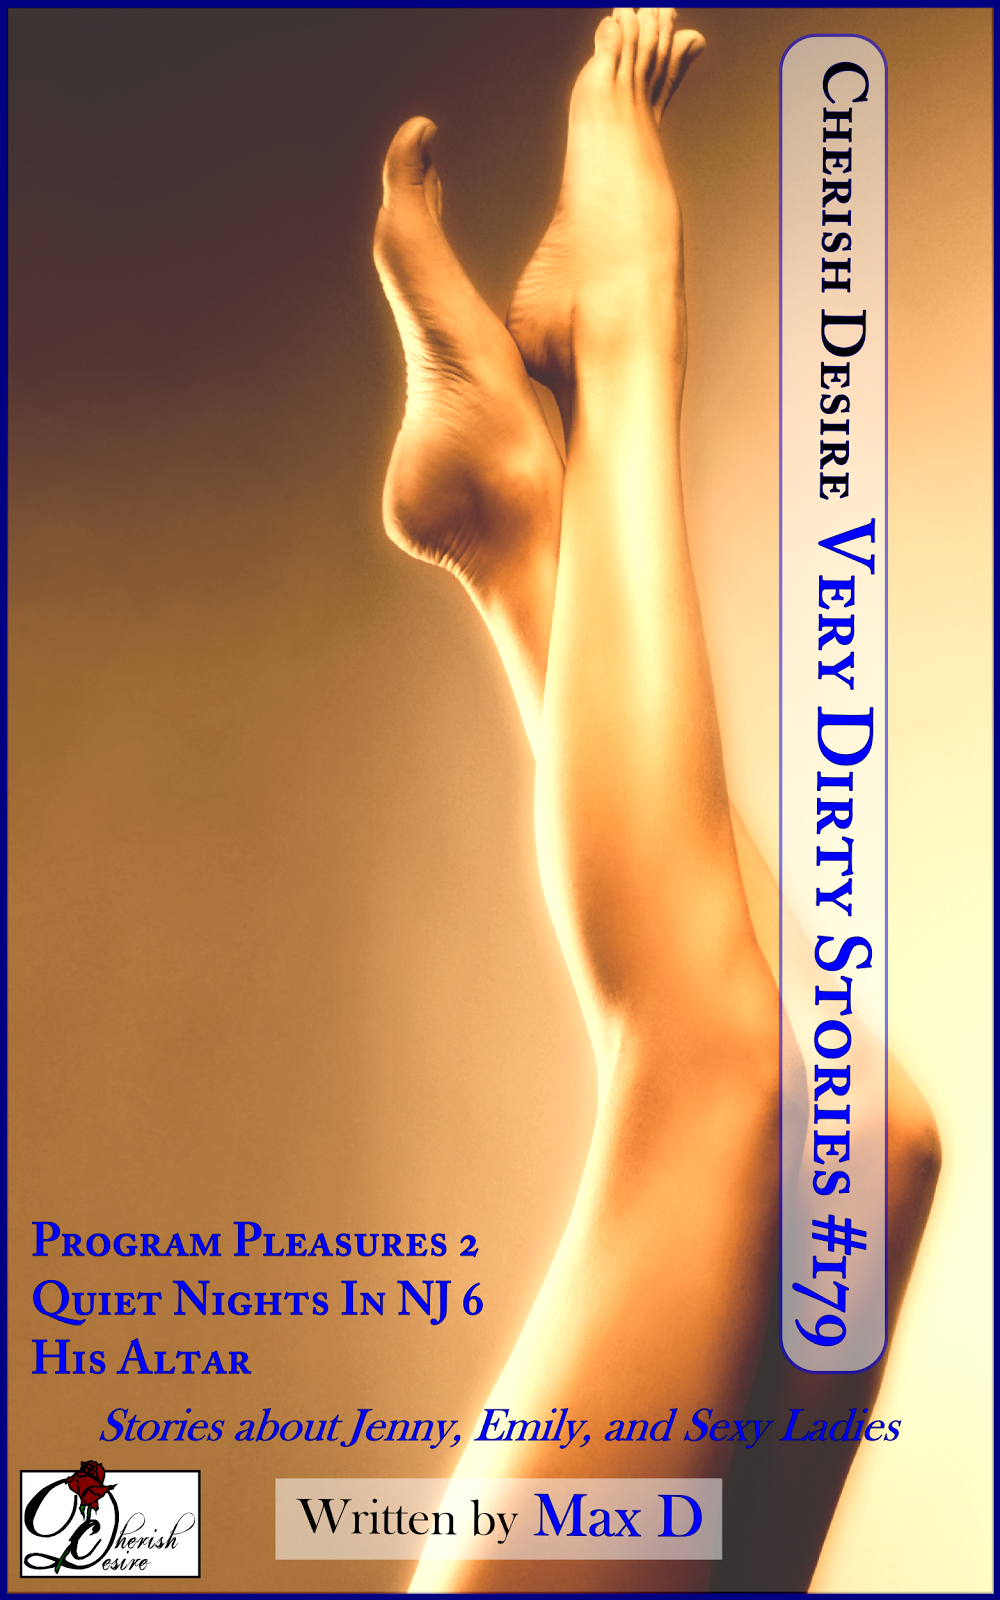 Cherish Desire: Very Dirty Stories #179, Max D, erotica